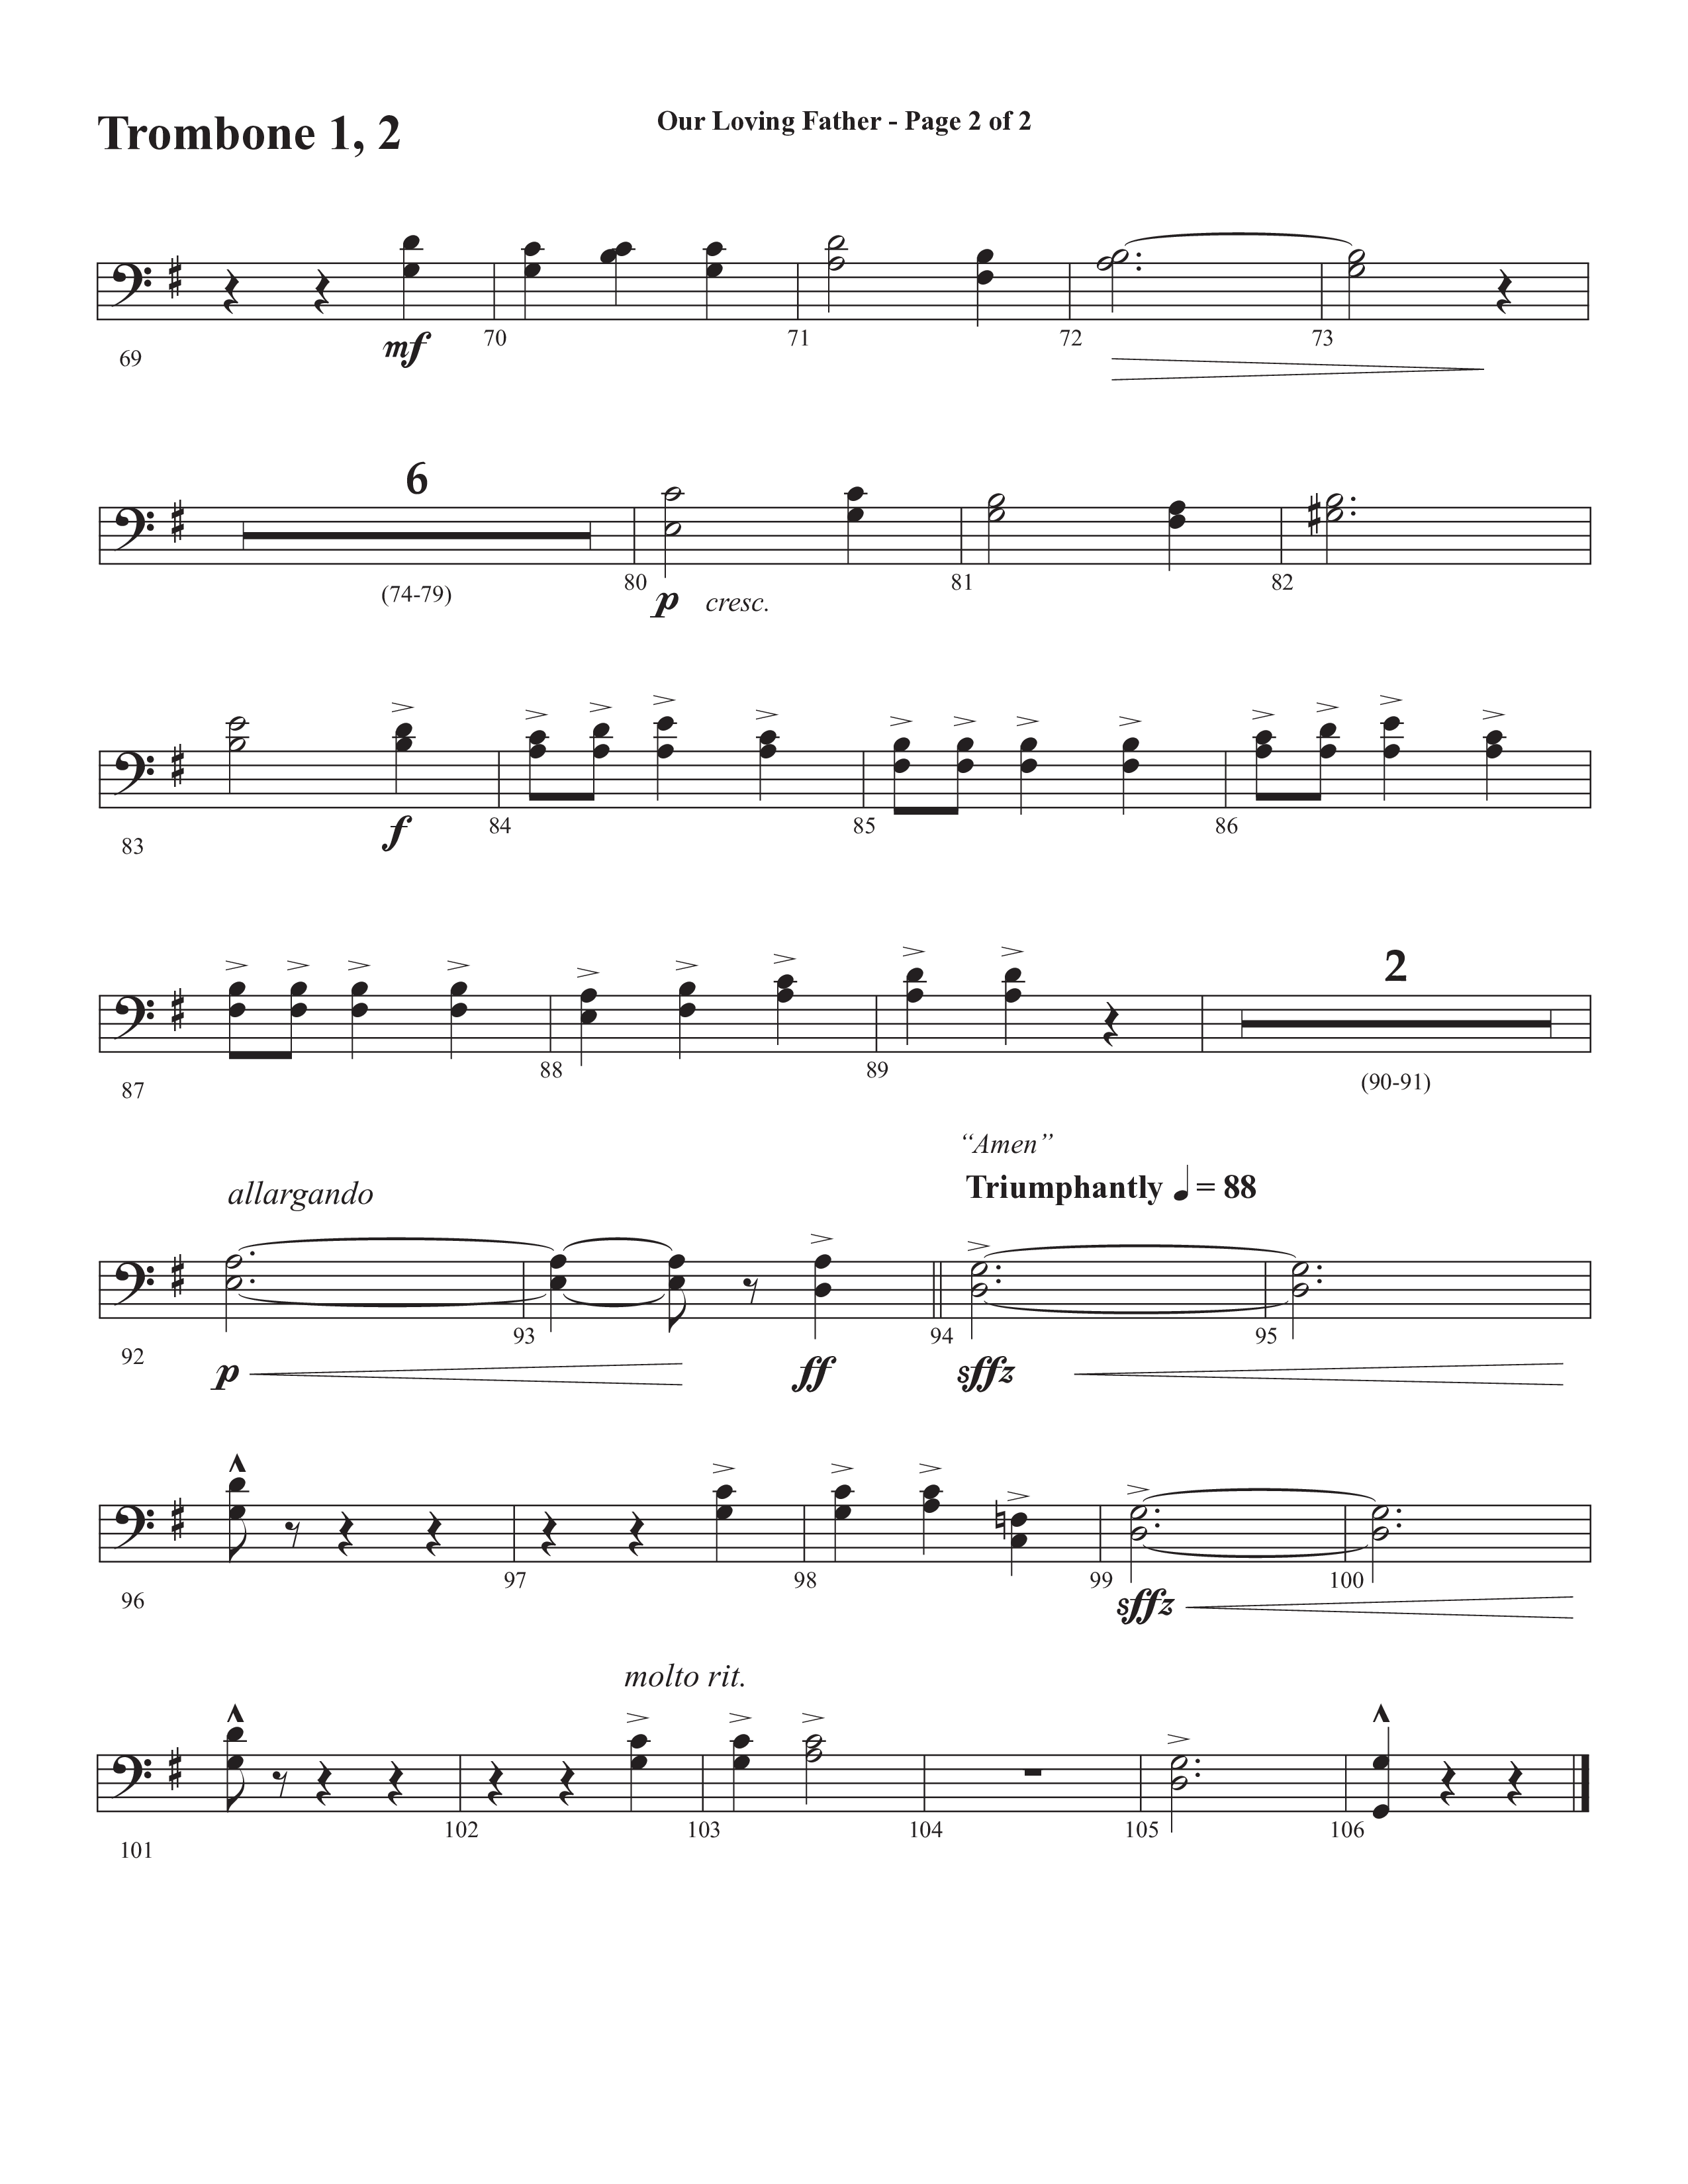 Our Loving Father (Choral Anthem SATB) Trombone 1/2 (Semsen Music / Arr. Phillip Keveren)